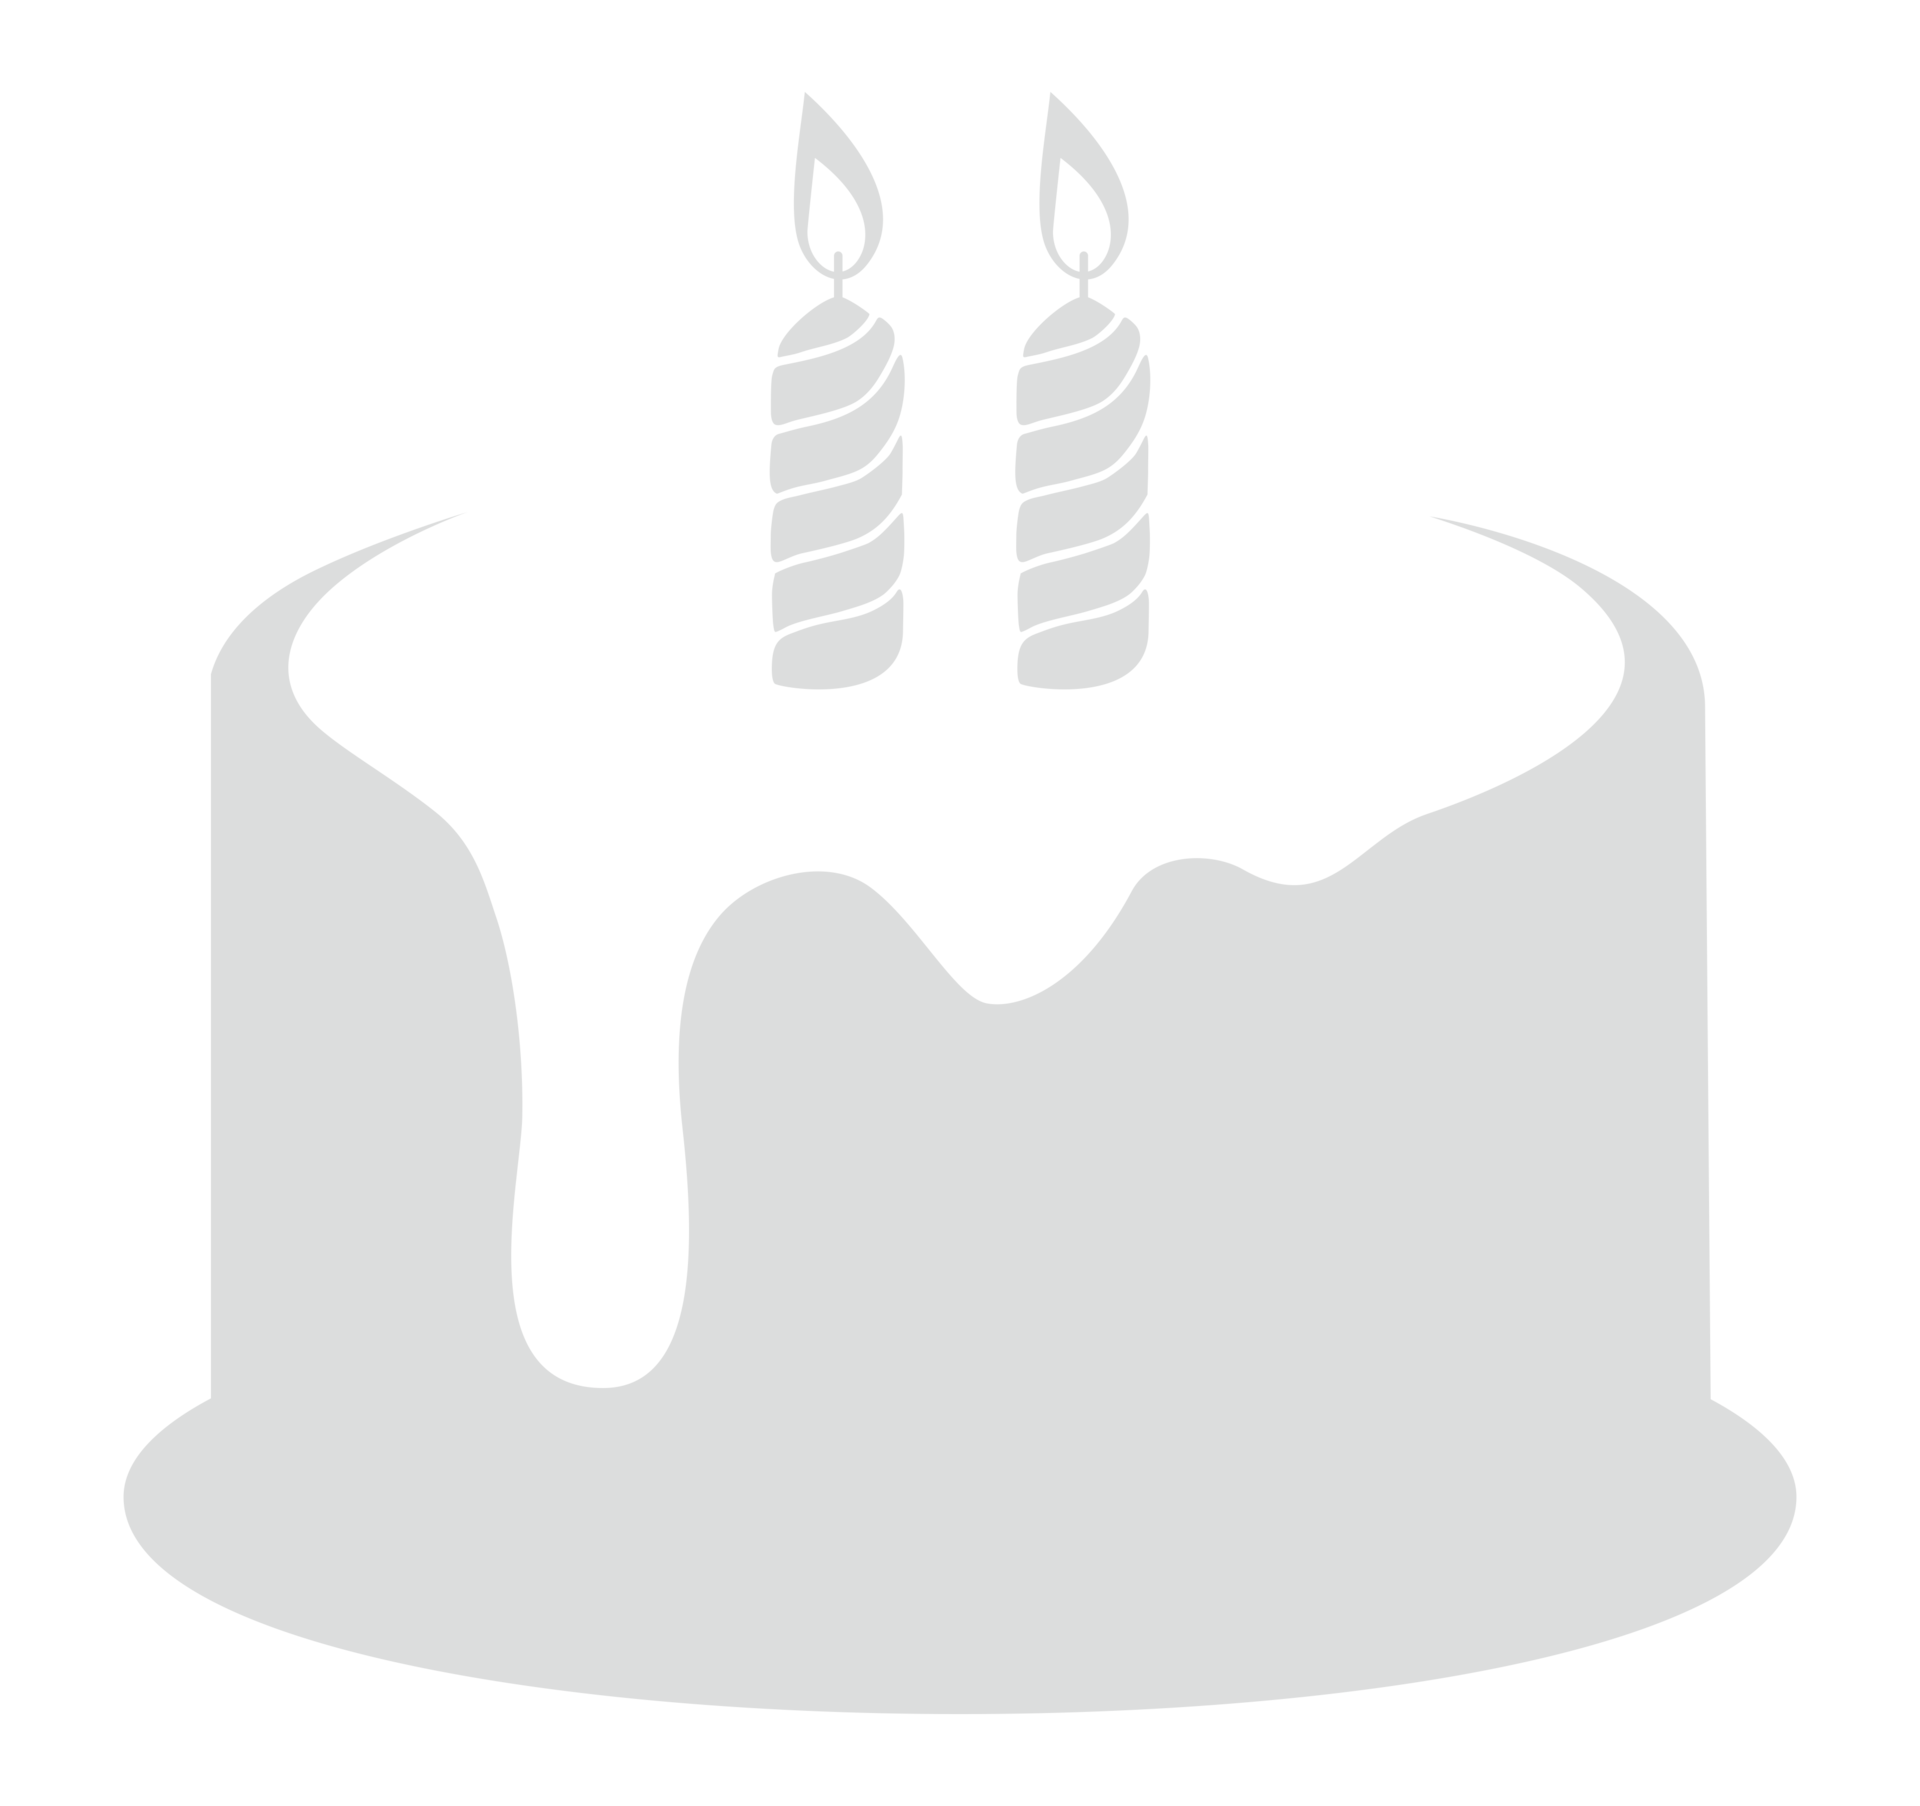 Modern Wedding Birthday Cake Logo Template Stock Vector Royalty Free  1217678710  Shutterstock